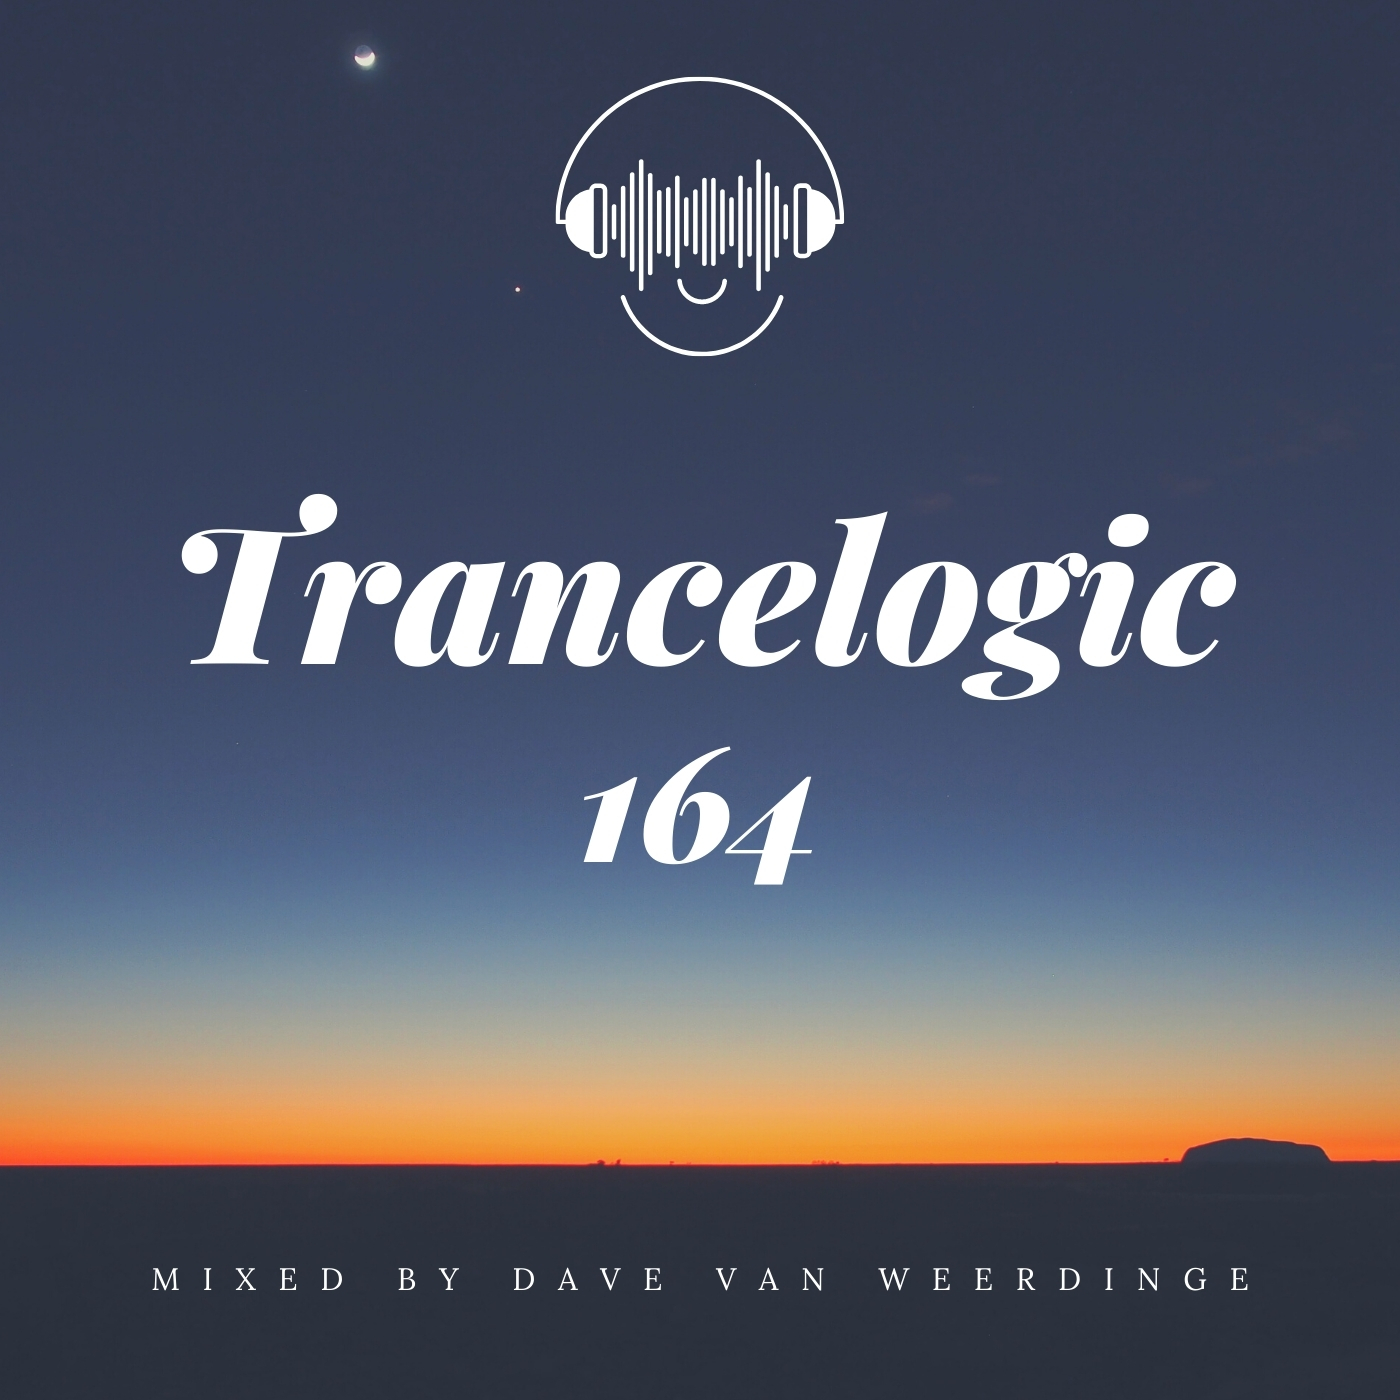 Trancelogic 164 by Dave van Weerdinge